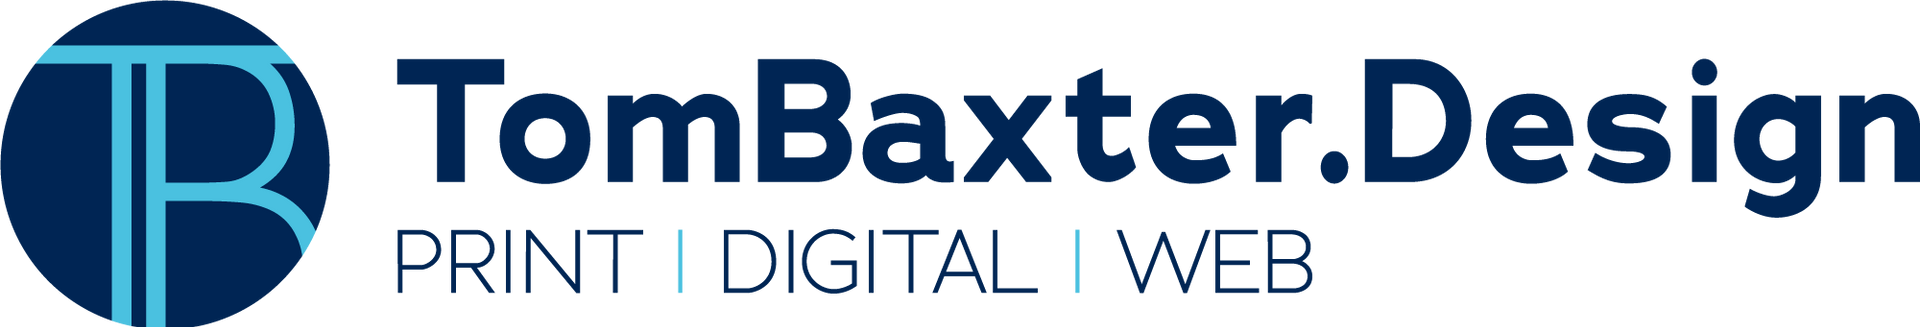 a logo for tom baxter design print digital web